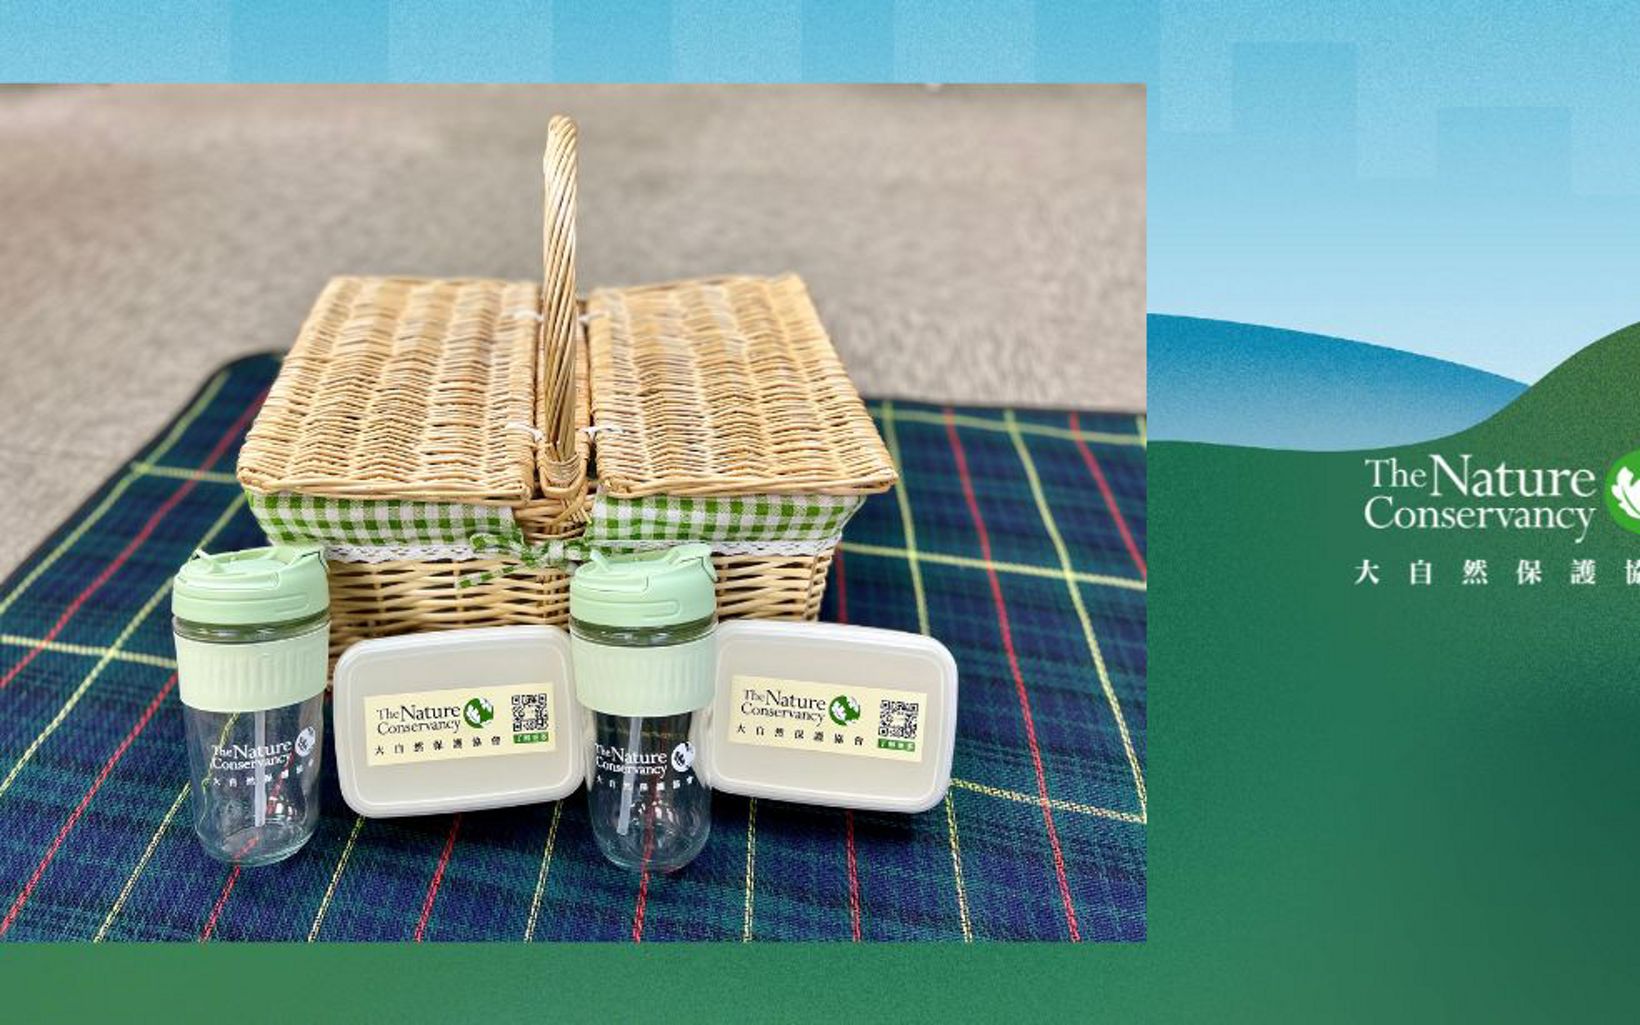 
                
                  TNC picnic set with mat 野餐套裝包括小食、飲品、可重用餐具與2人野餐墊
                  © Alison Hui / TNC
                
              